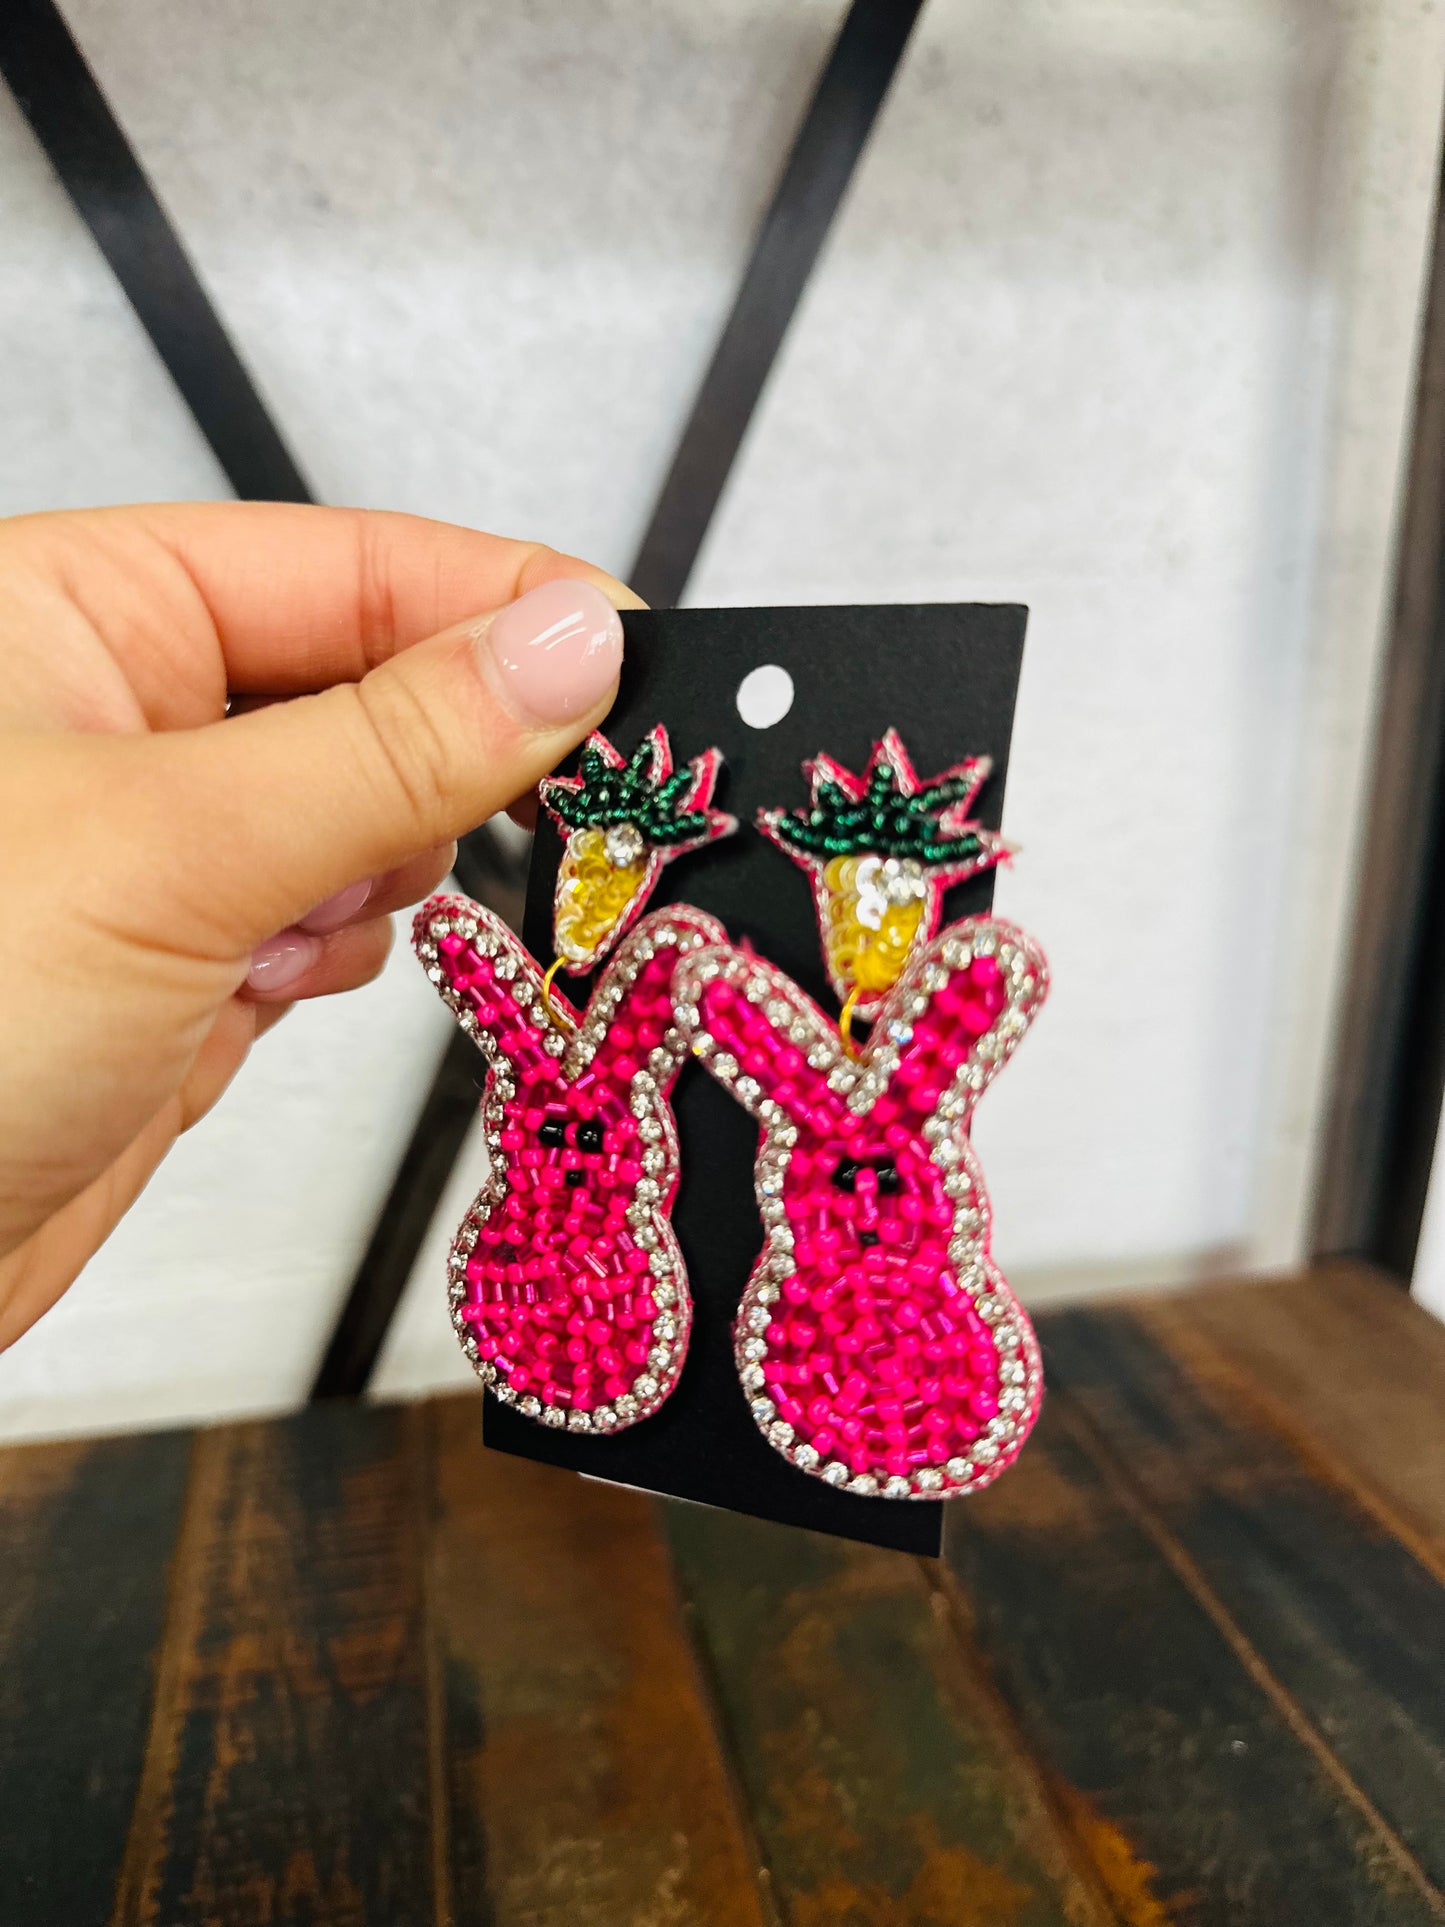 Hot Pink Easter Bunny Beaded Earrings